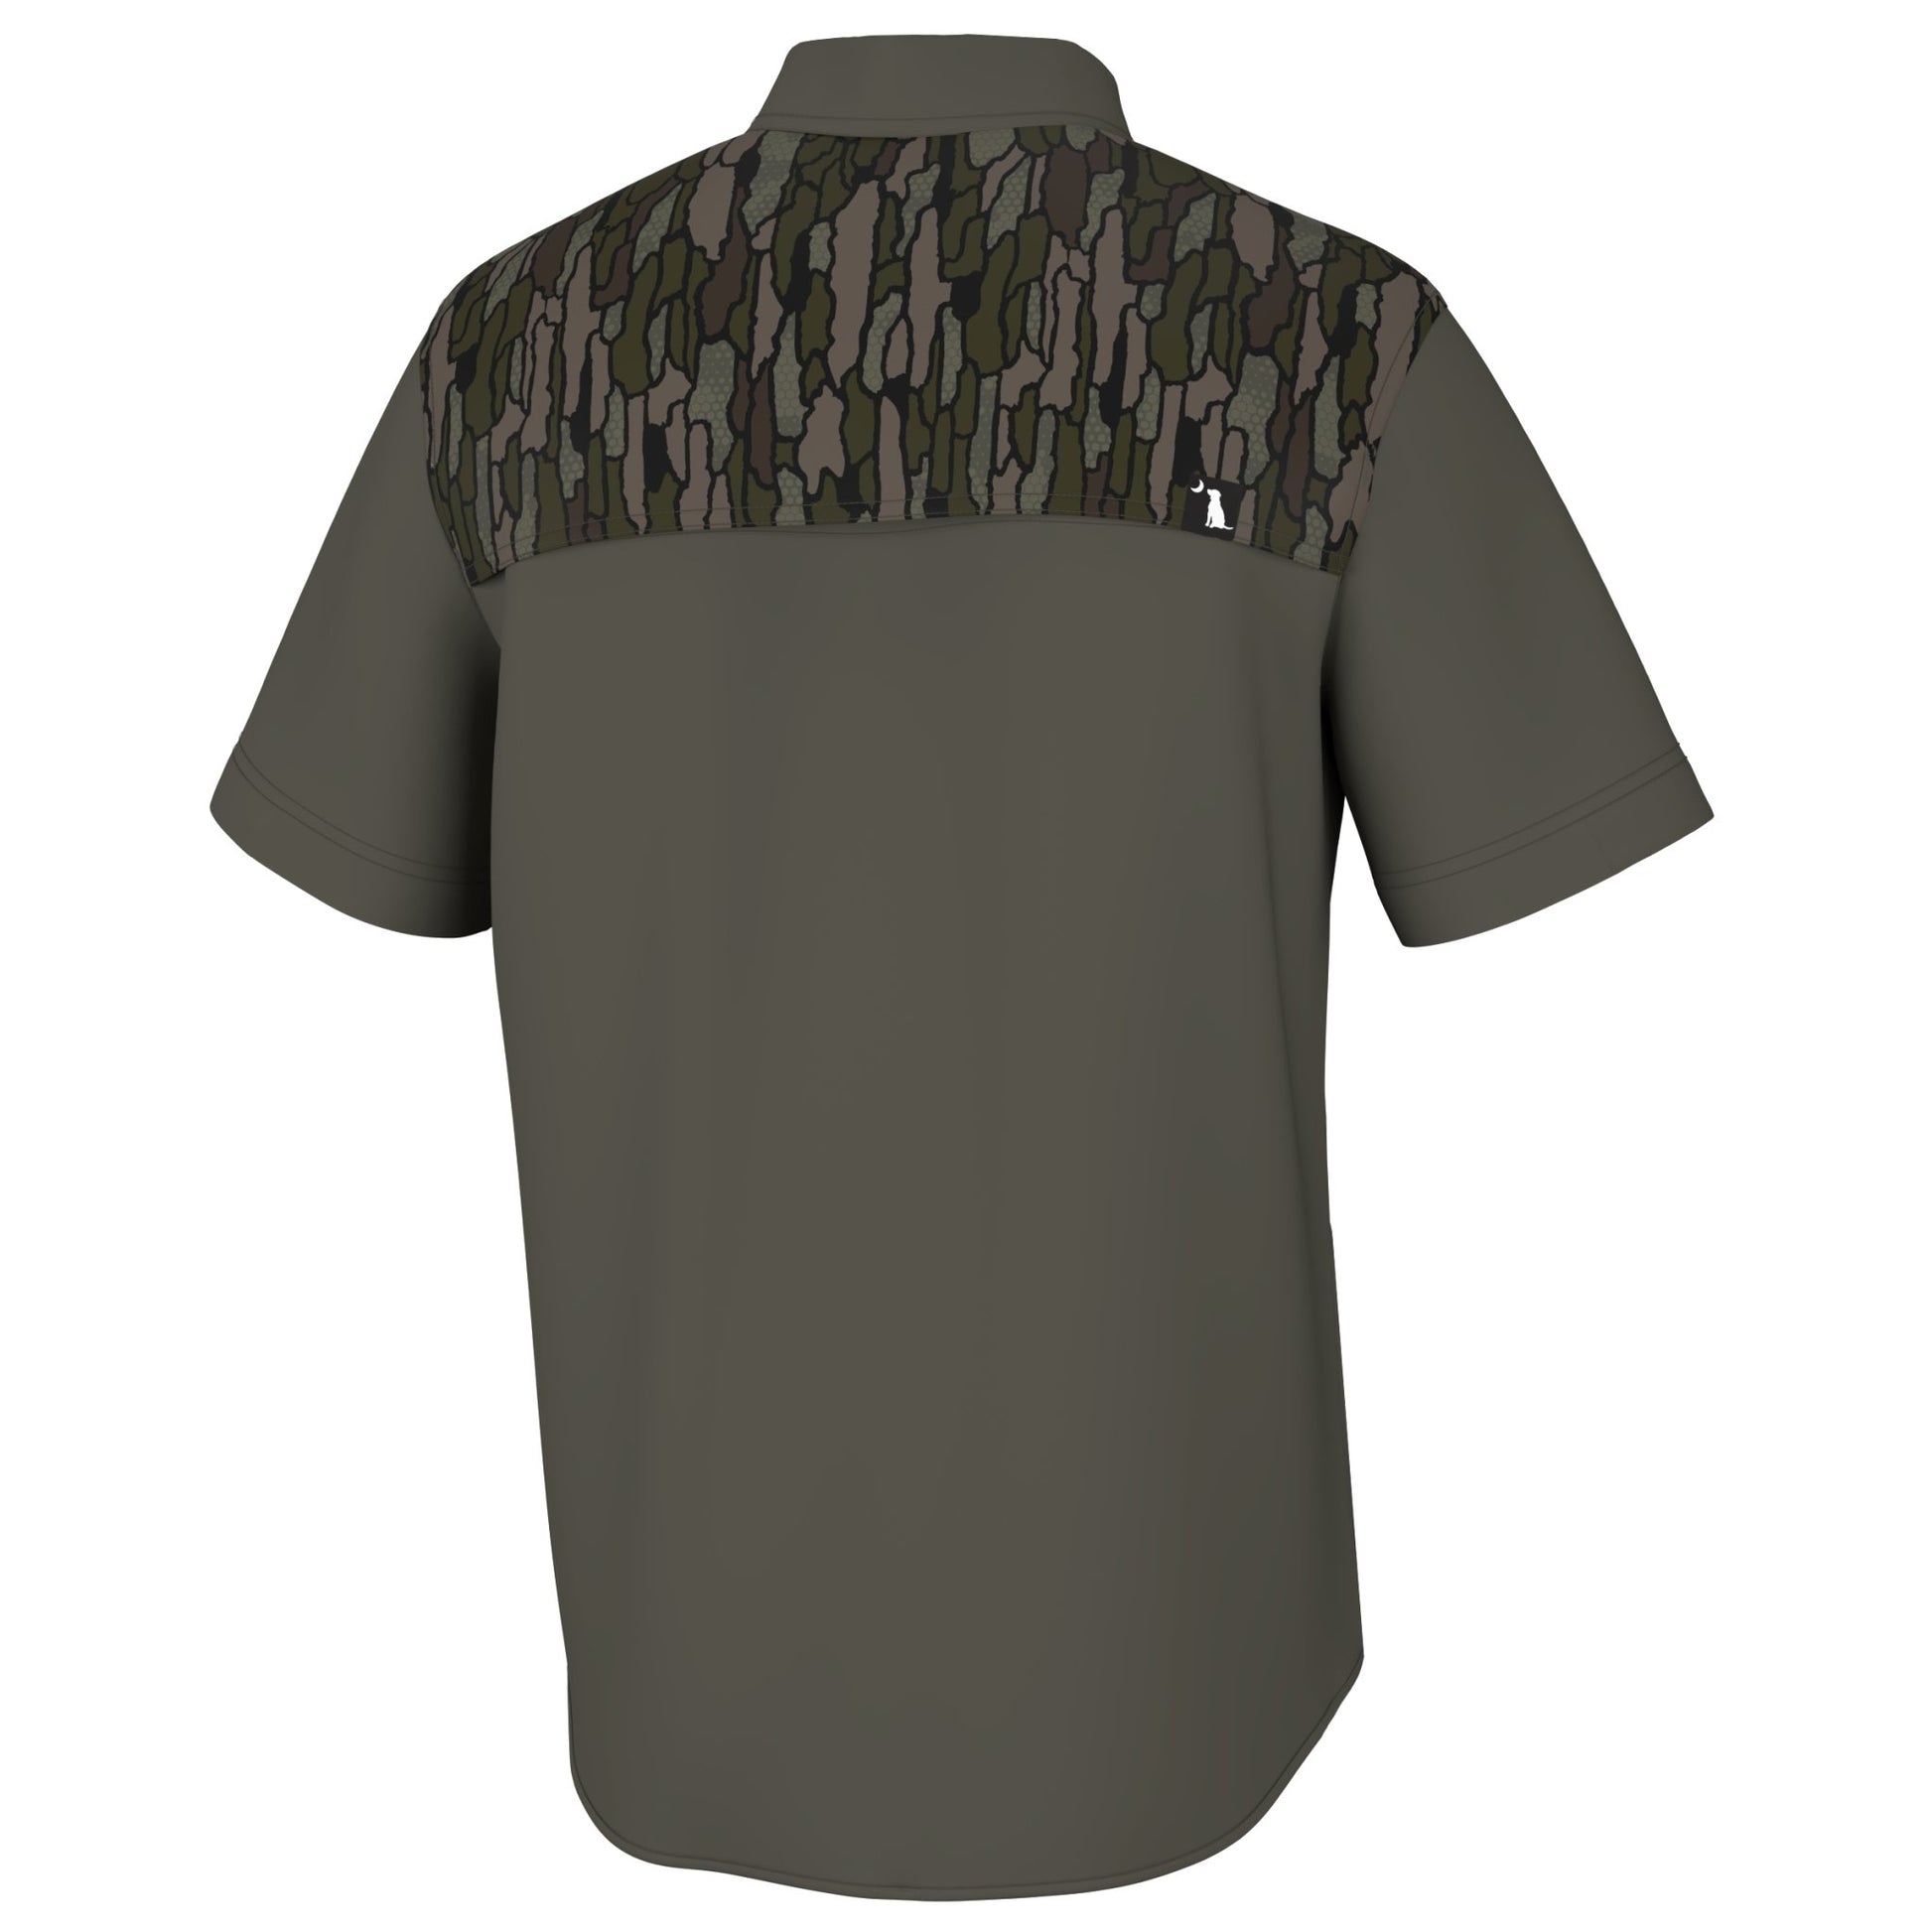 Seadation Angler Fishing Shirt- Localflage Timber/Olive - Mercantile213